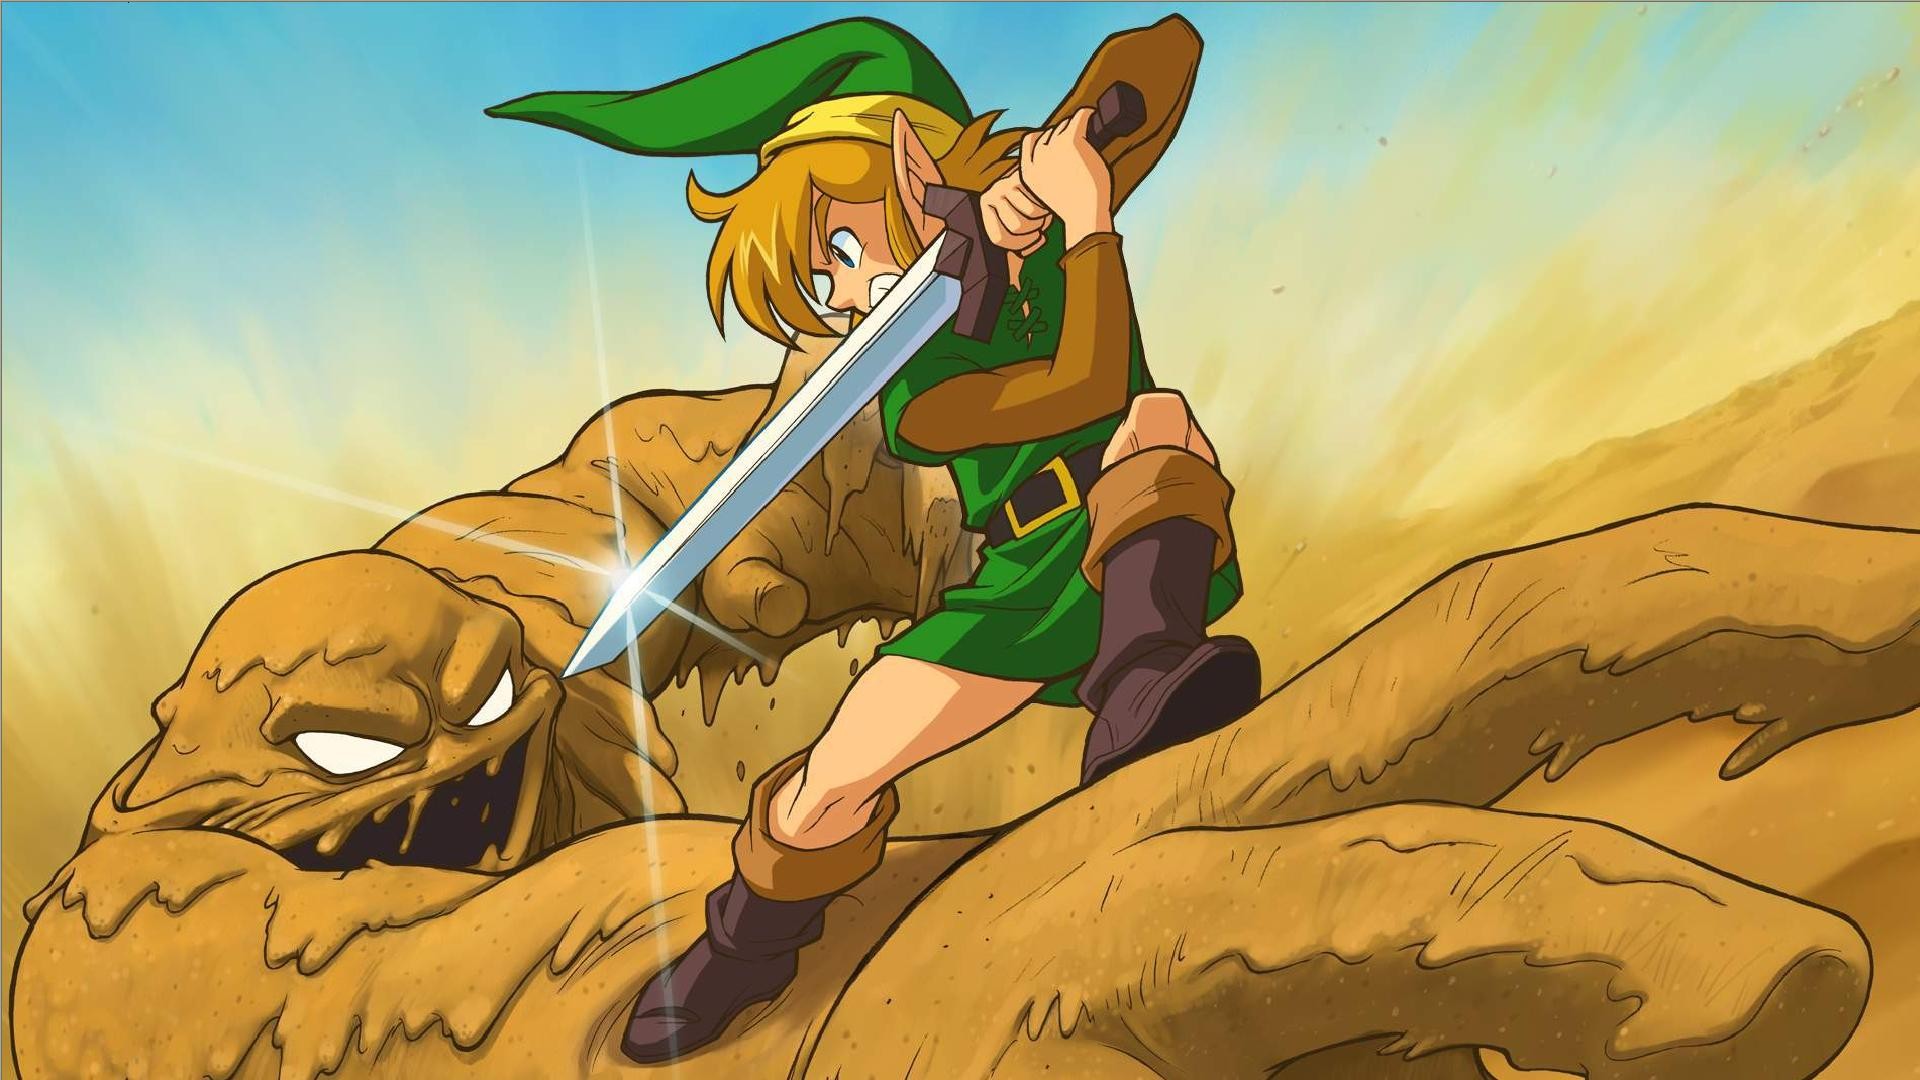 Anime 1920x1080 animation Link The Legend of Zelda sword creature video games video game art fantasy art